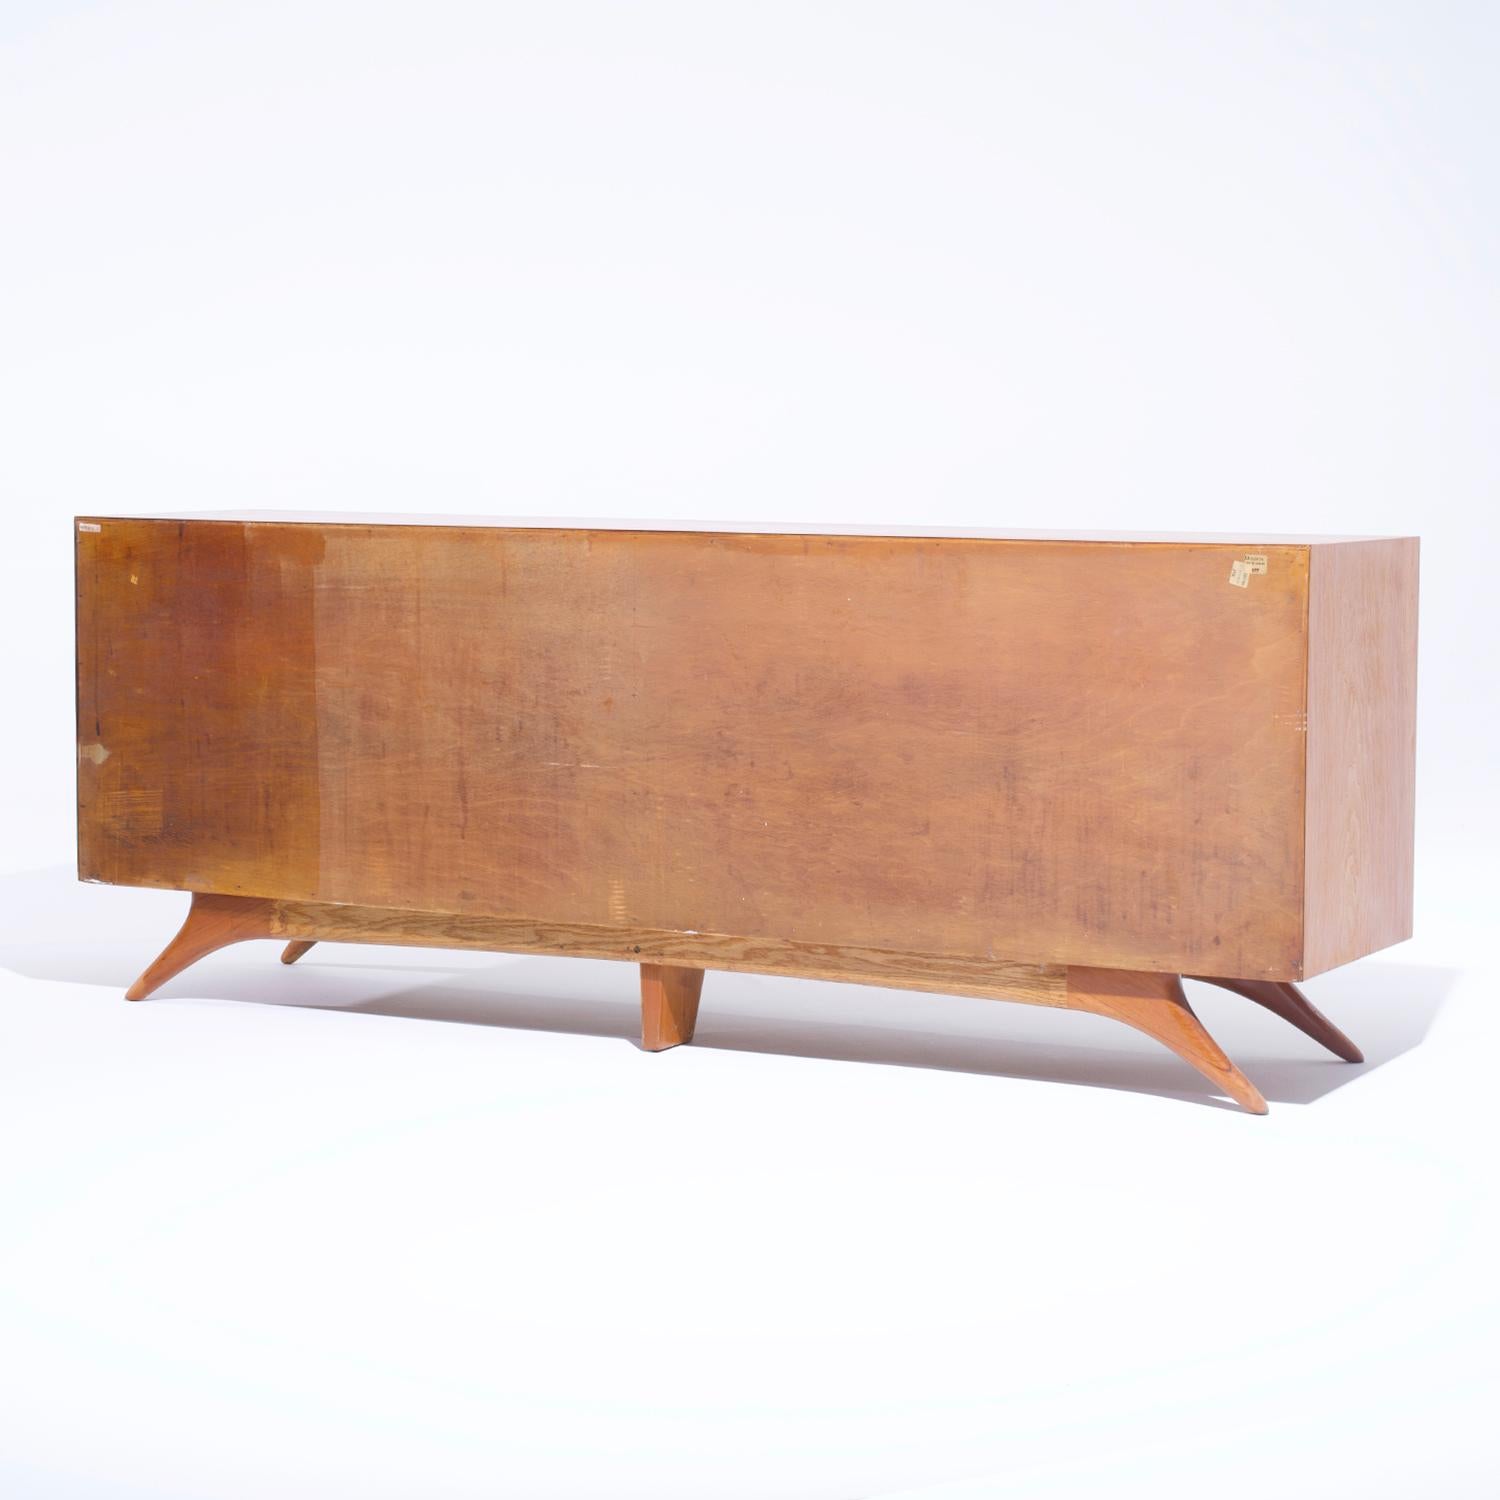 20th Century American Vintage Bleached Mahogany Dresser by Vladimir Kagan For Sale 7